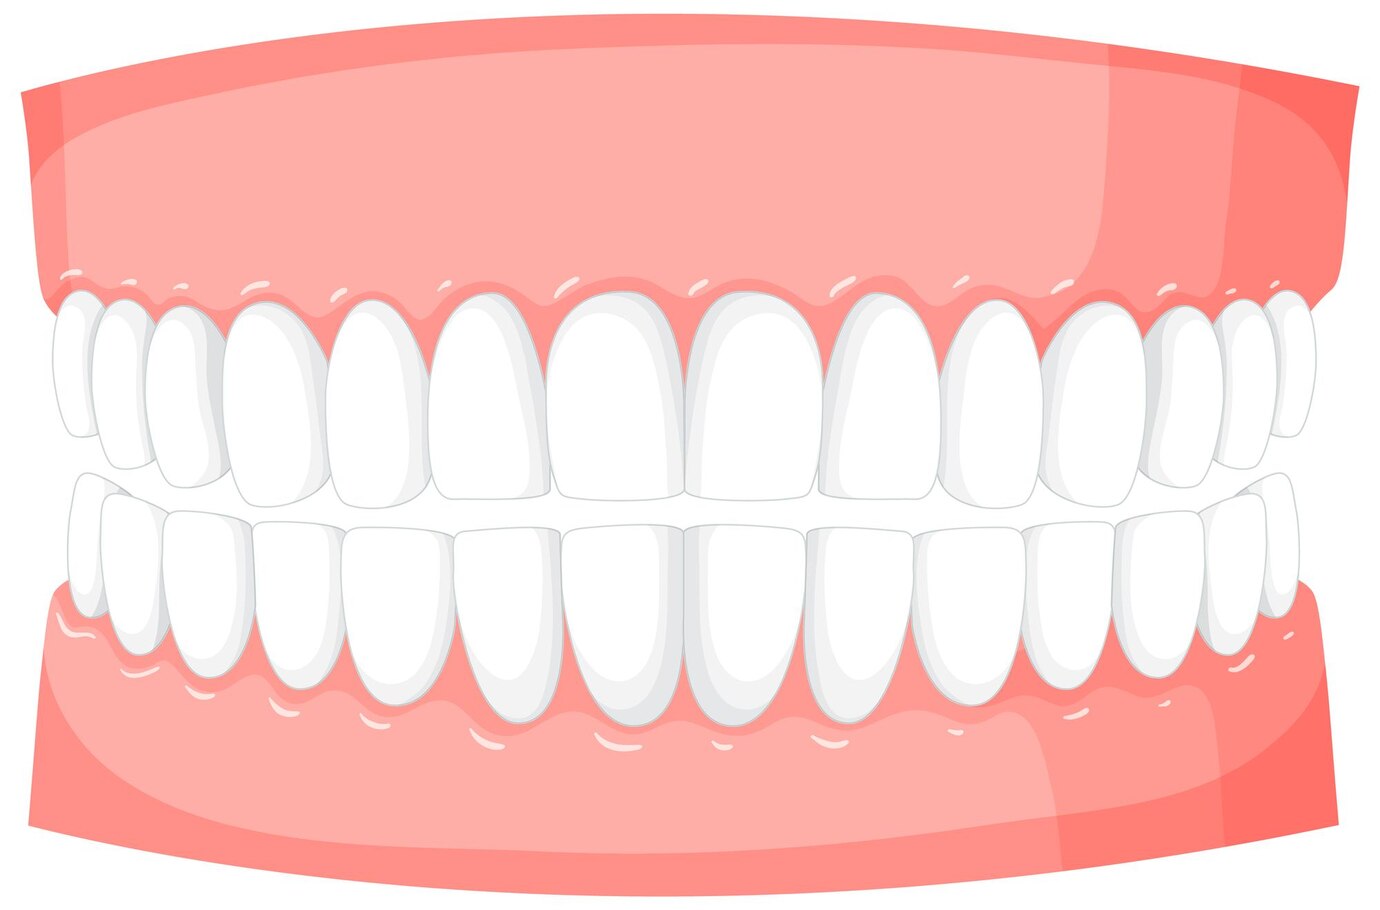 human-teeth-model-white-background_1308-108364